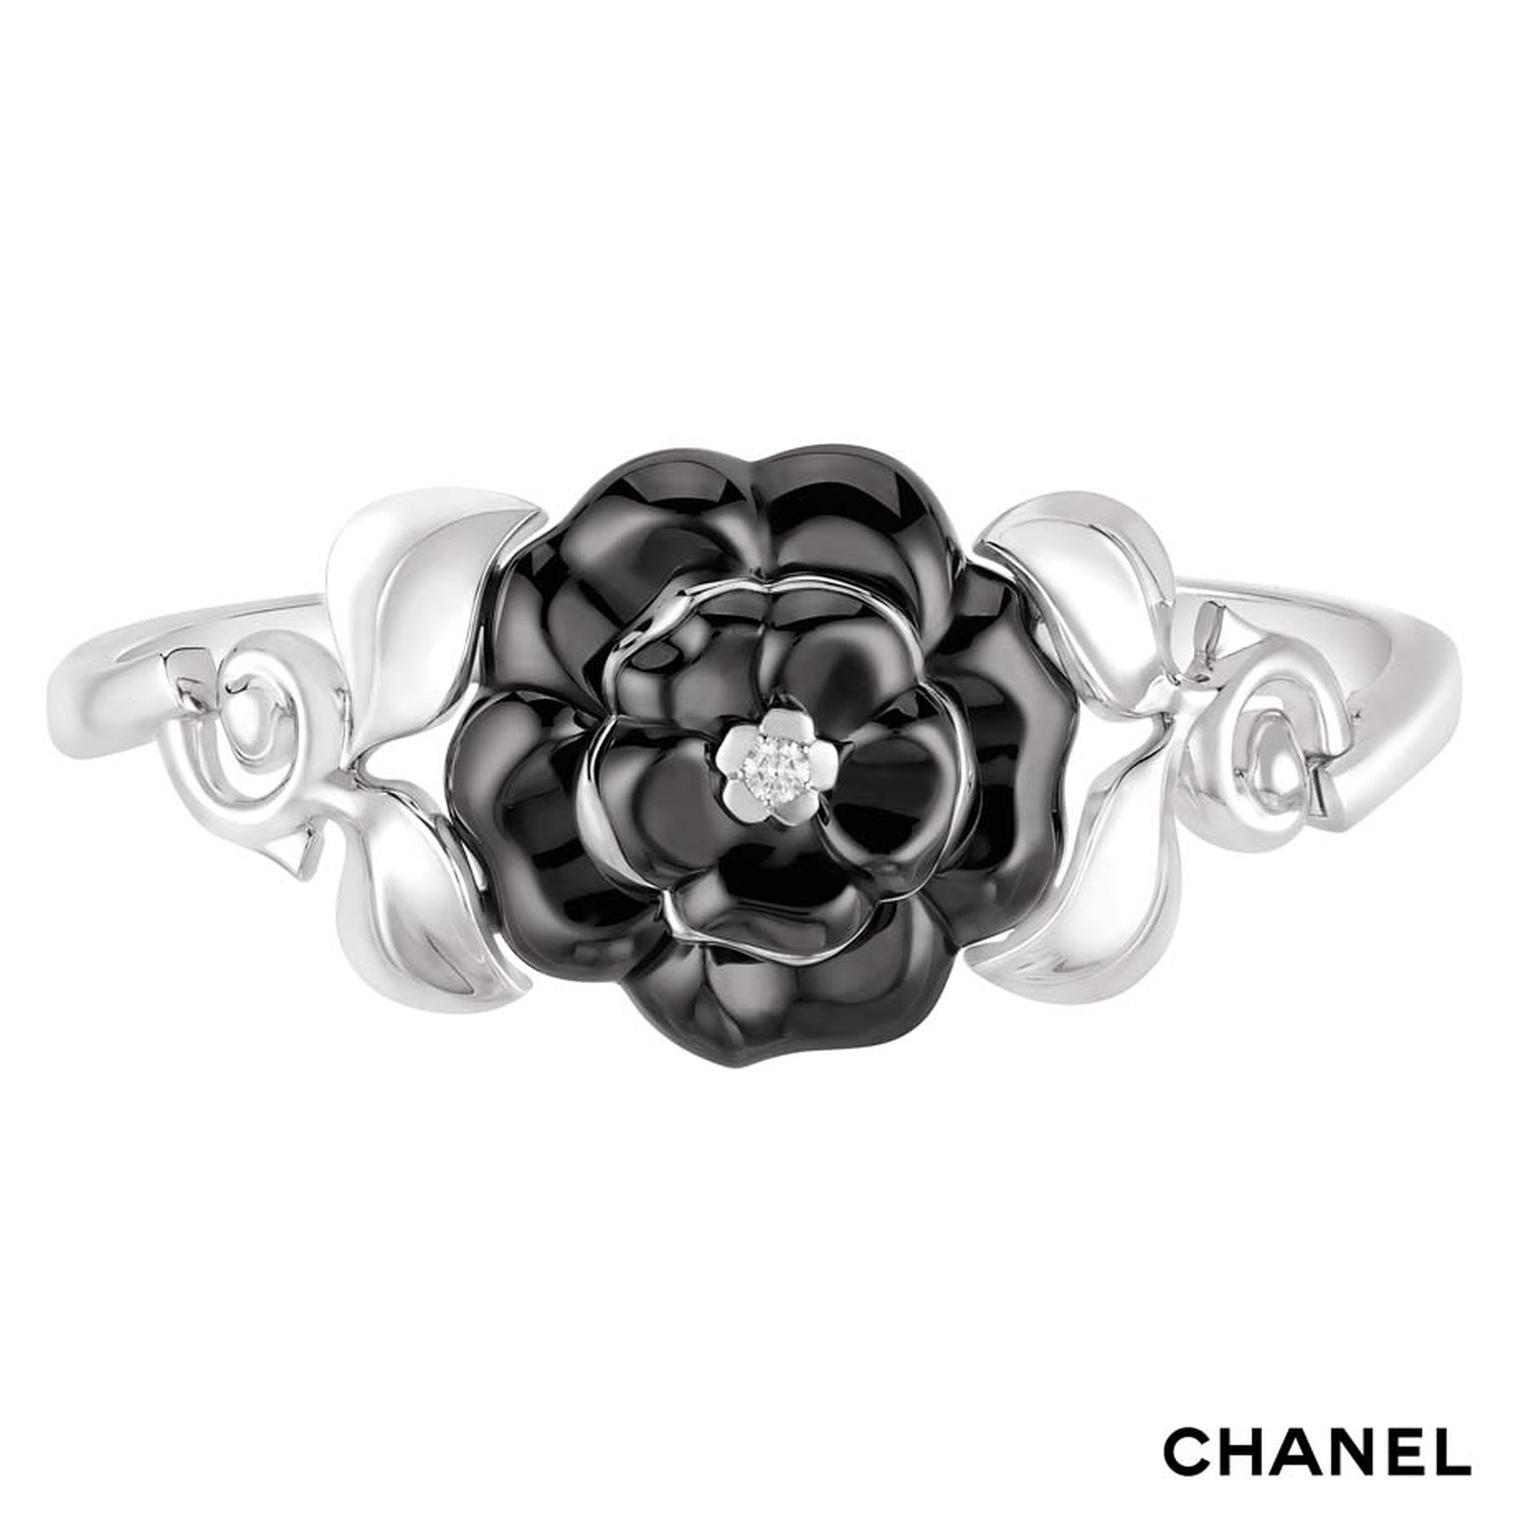 Chanel Camélia Galbé white gold bracelet with a black ceramic flower and a central brilliant-cut diamond